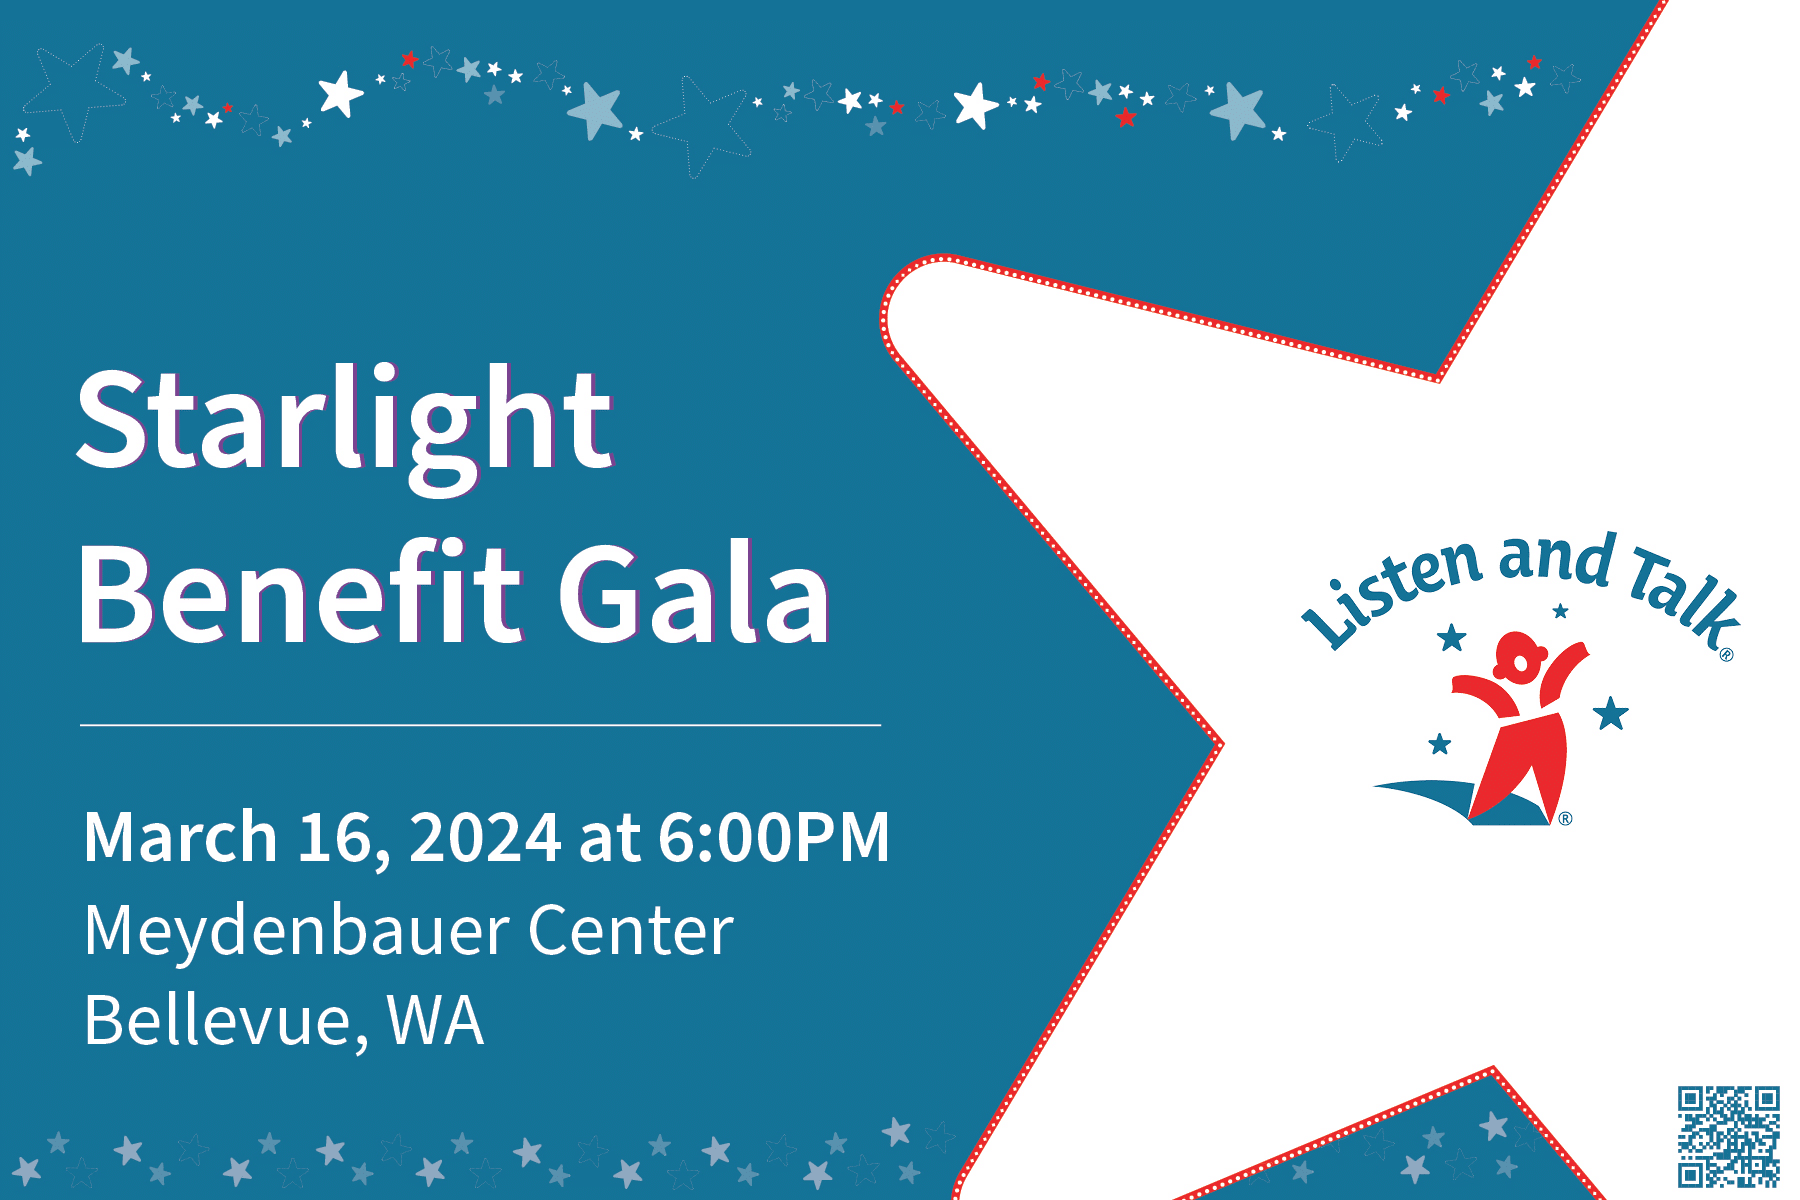 Listen and Talk Starlight Benefit Gala 2024 Banner